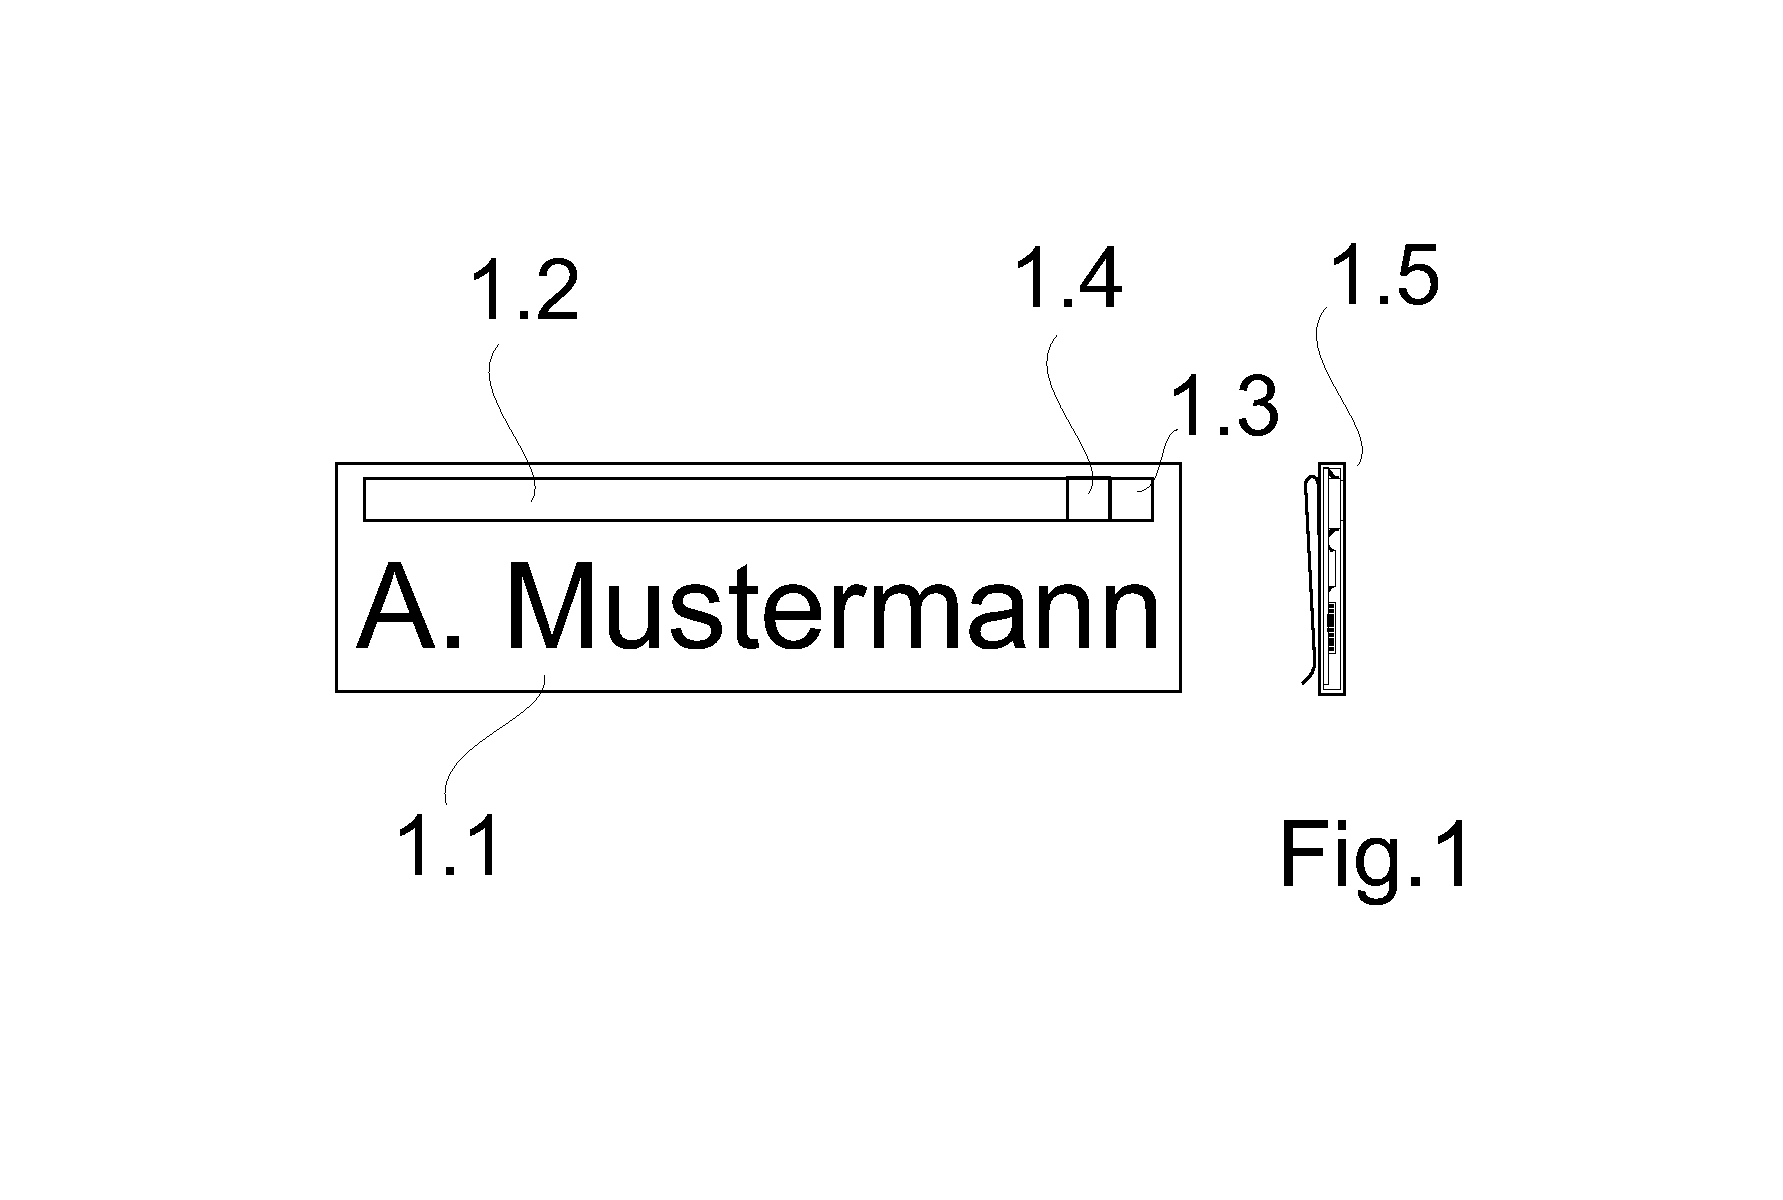 Identification element having an optical transponder